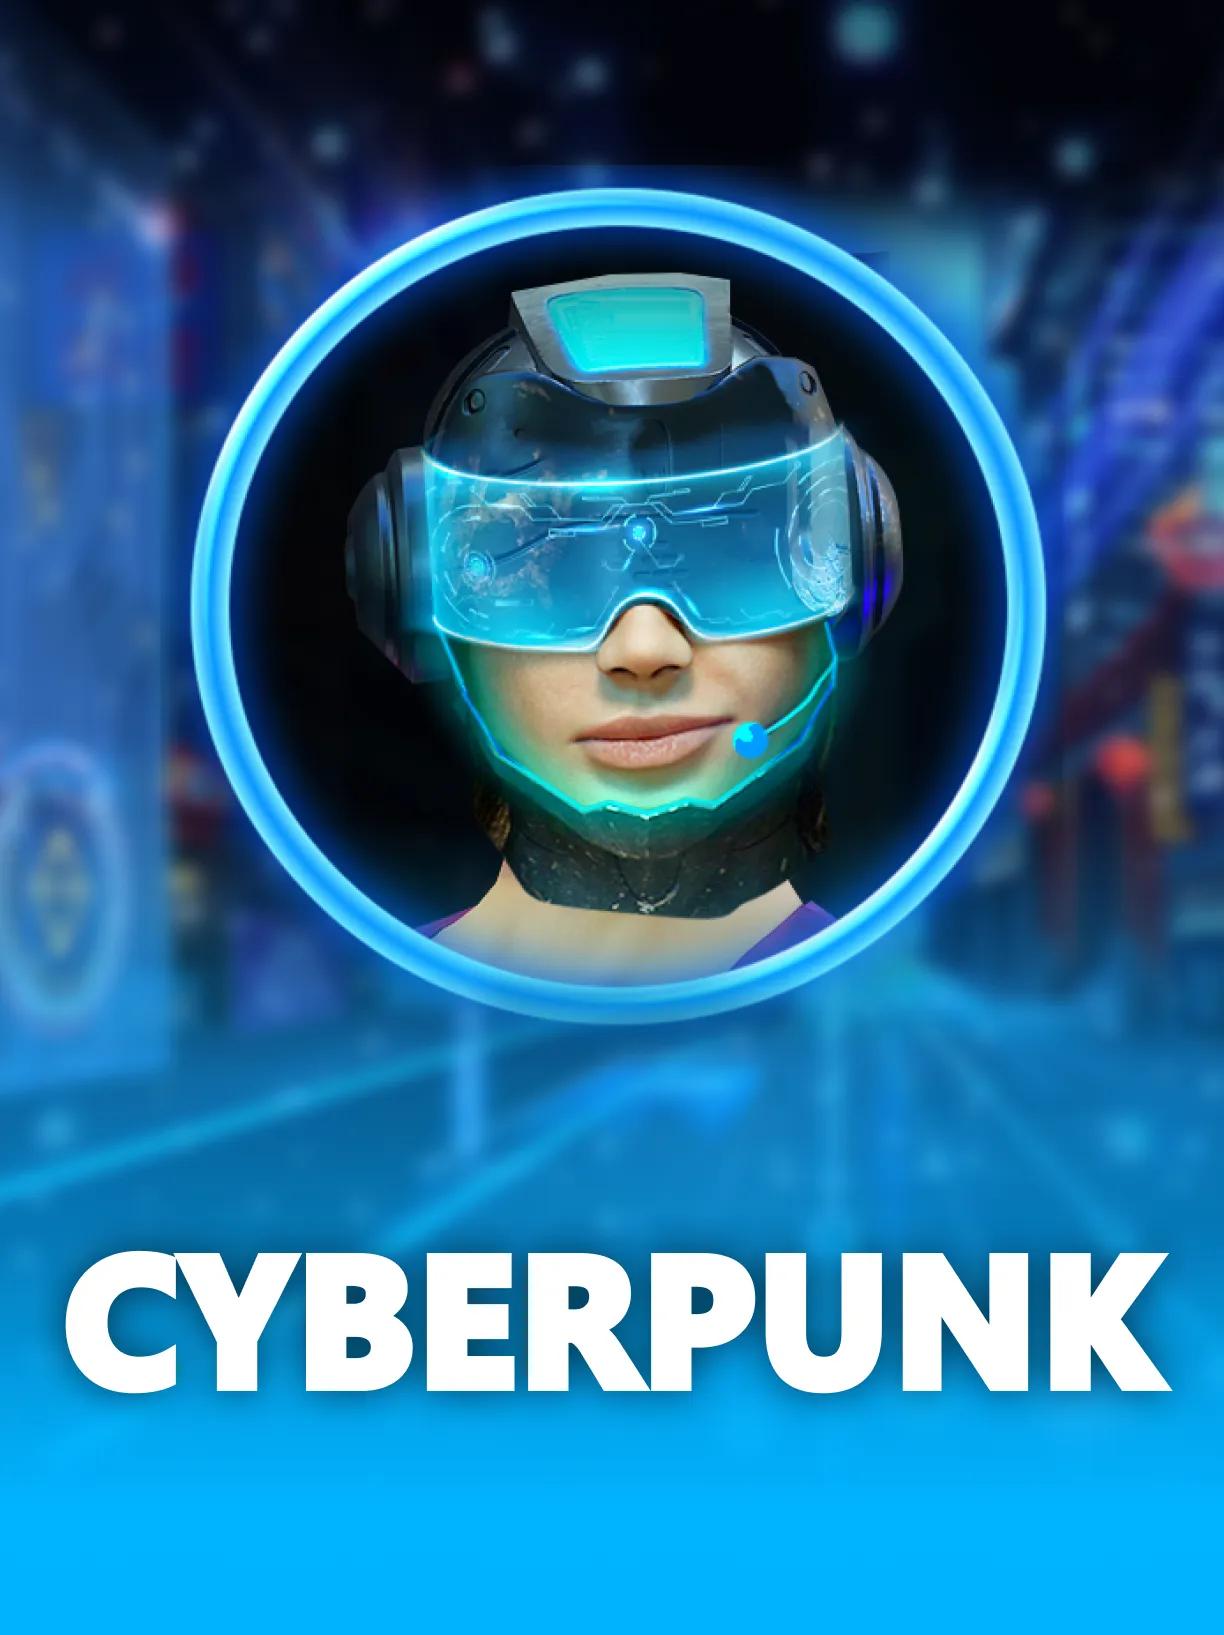 ug_Cyberpunk_square.webp